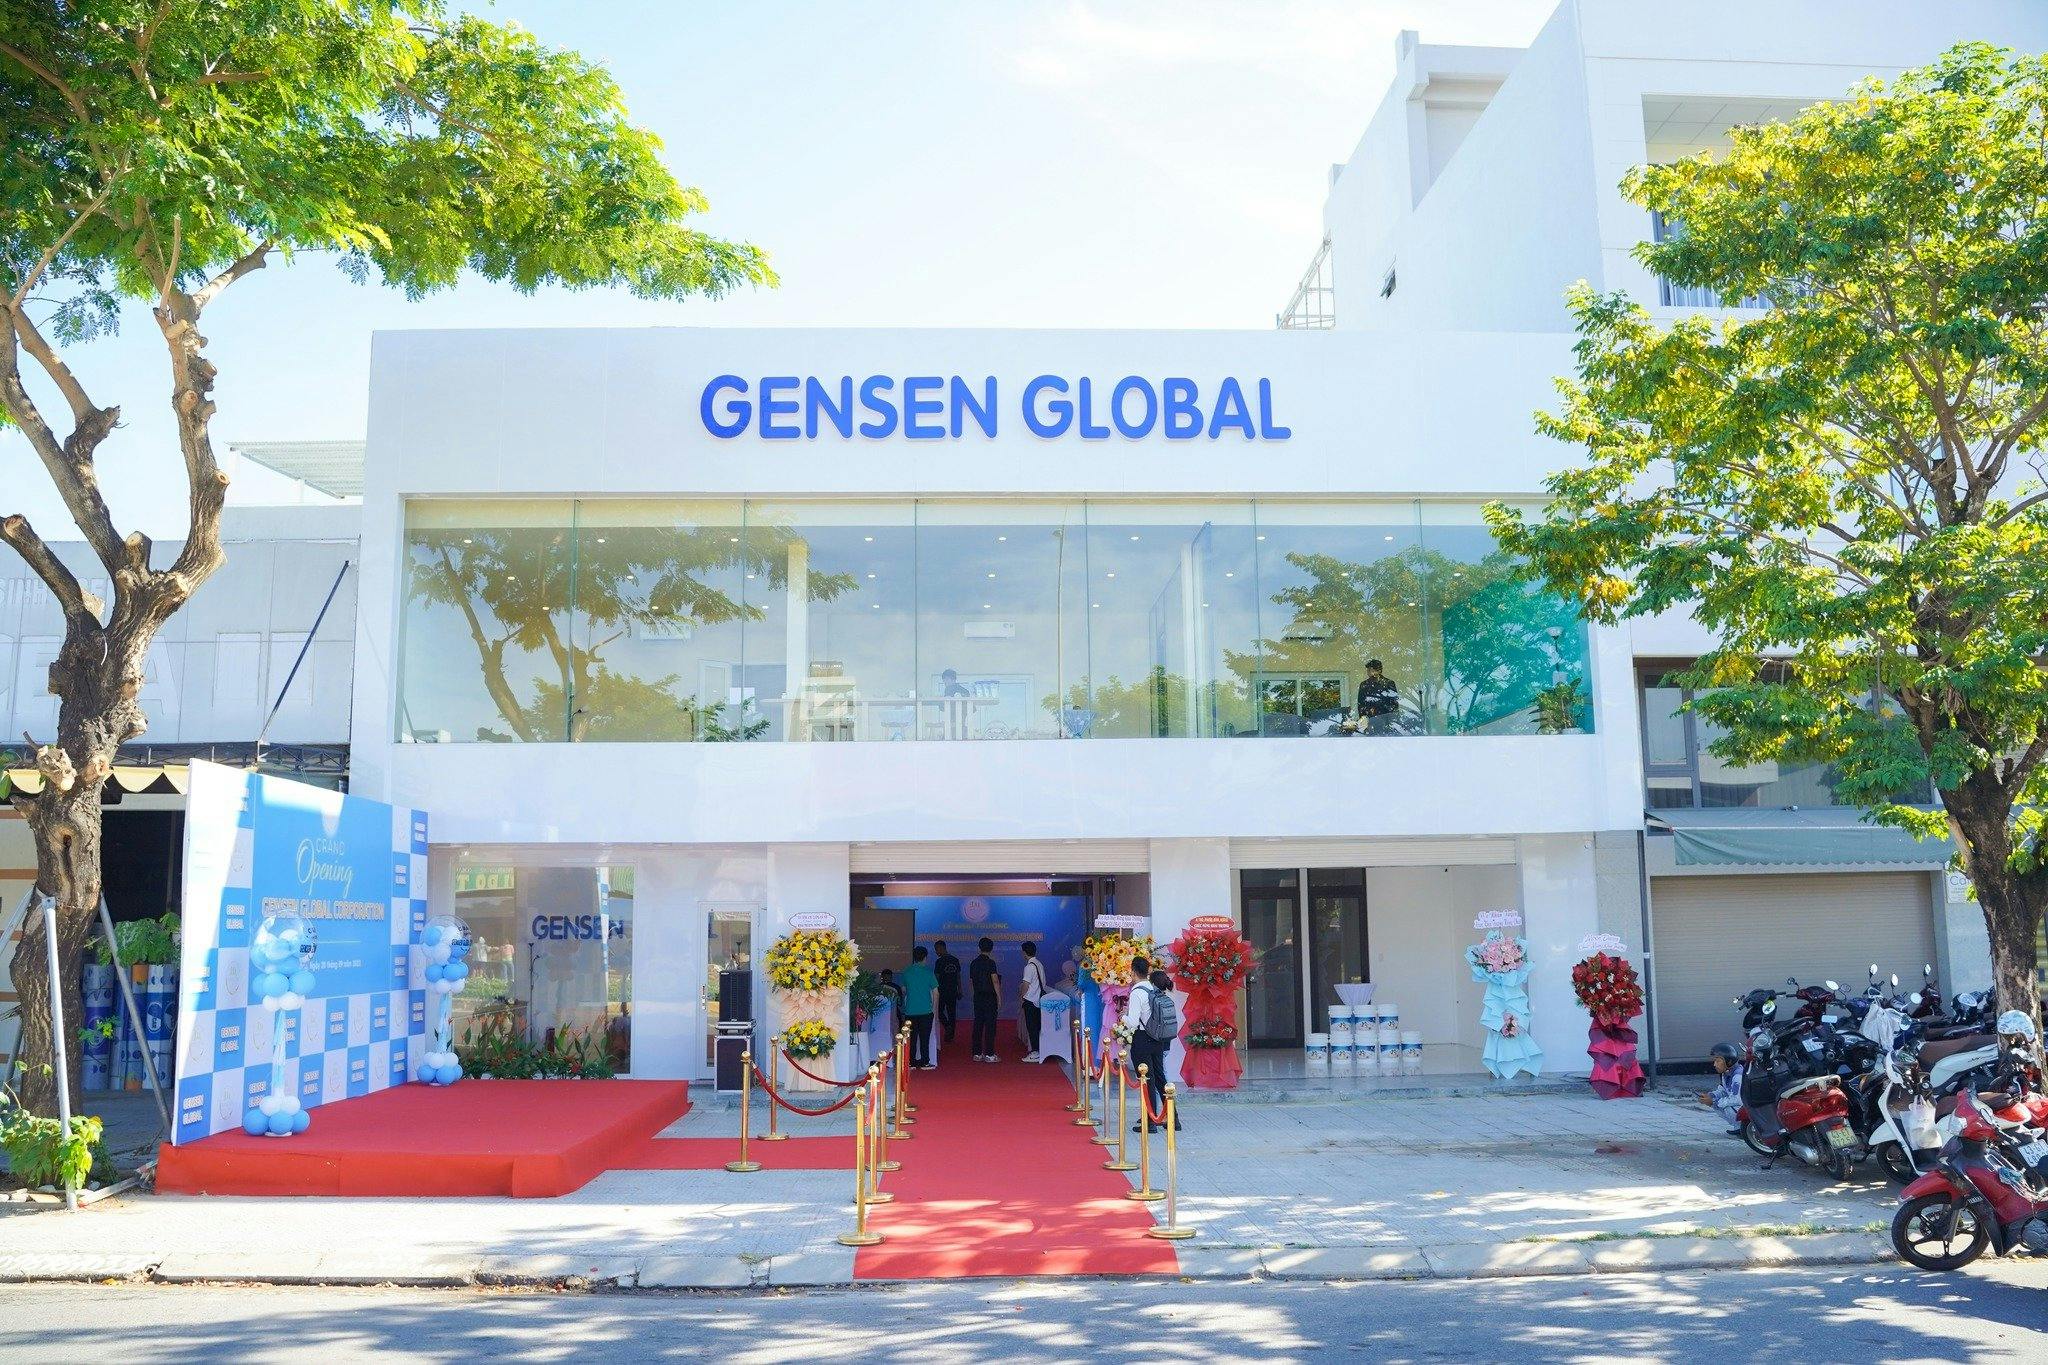 Gensen Global office